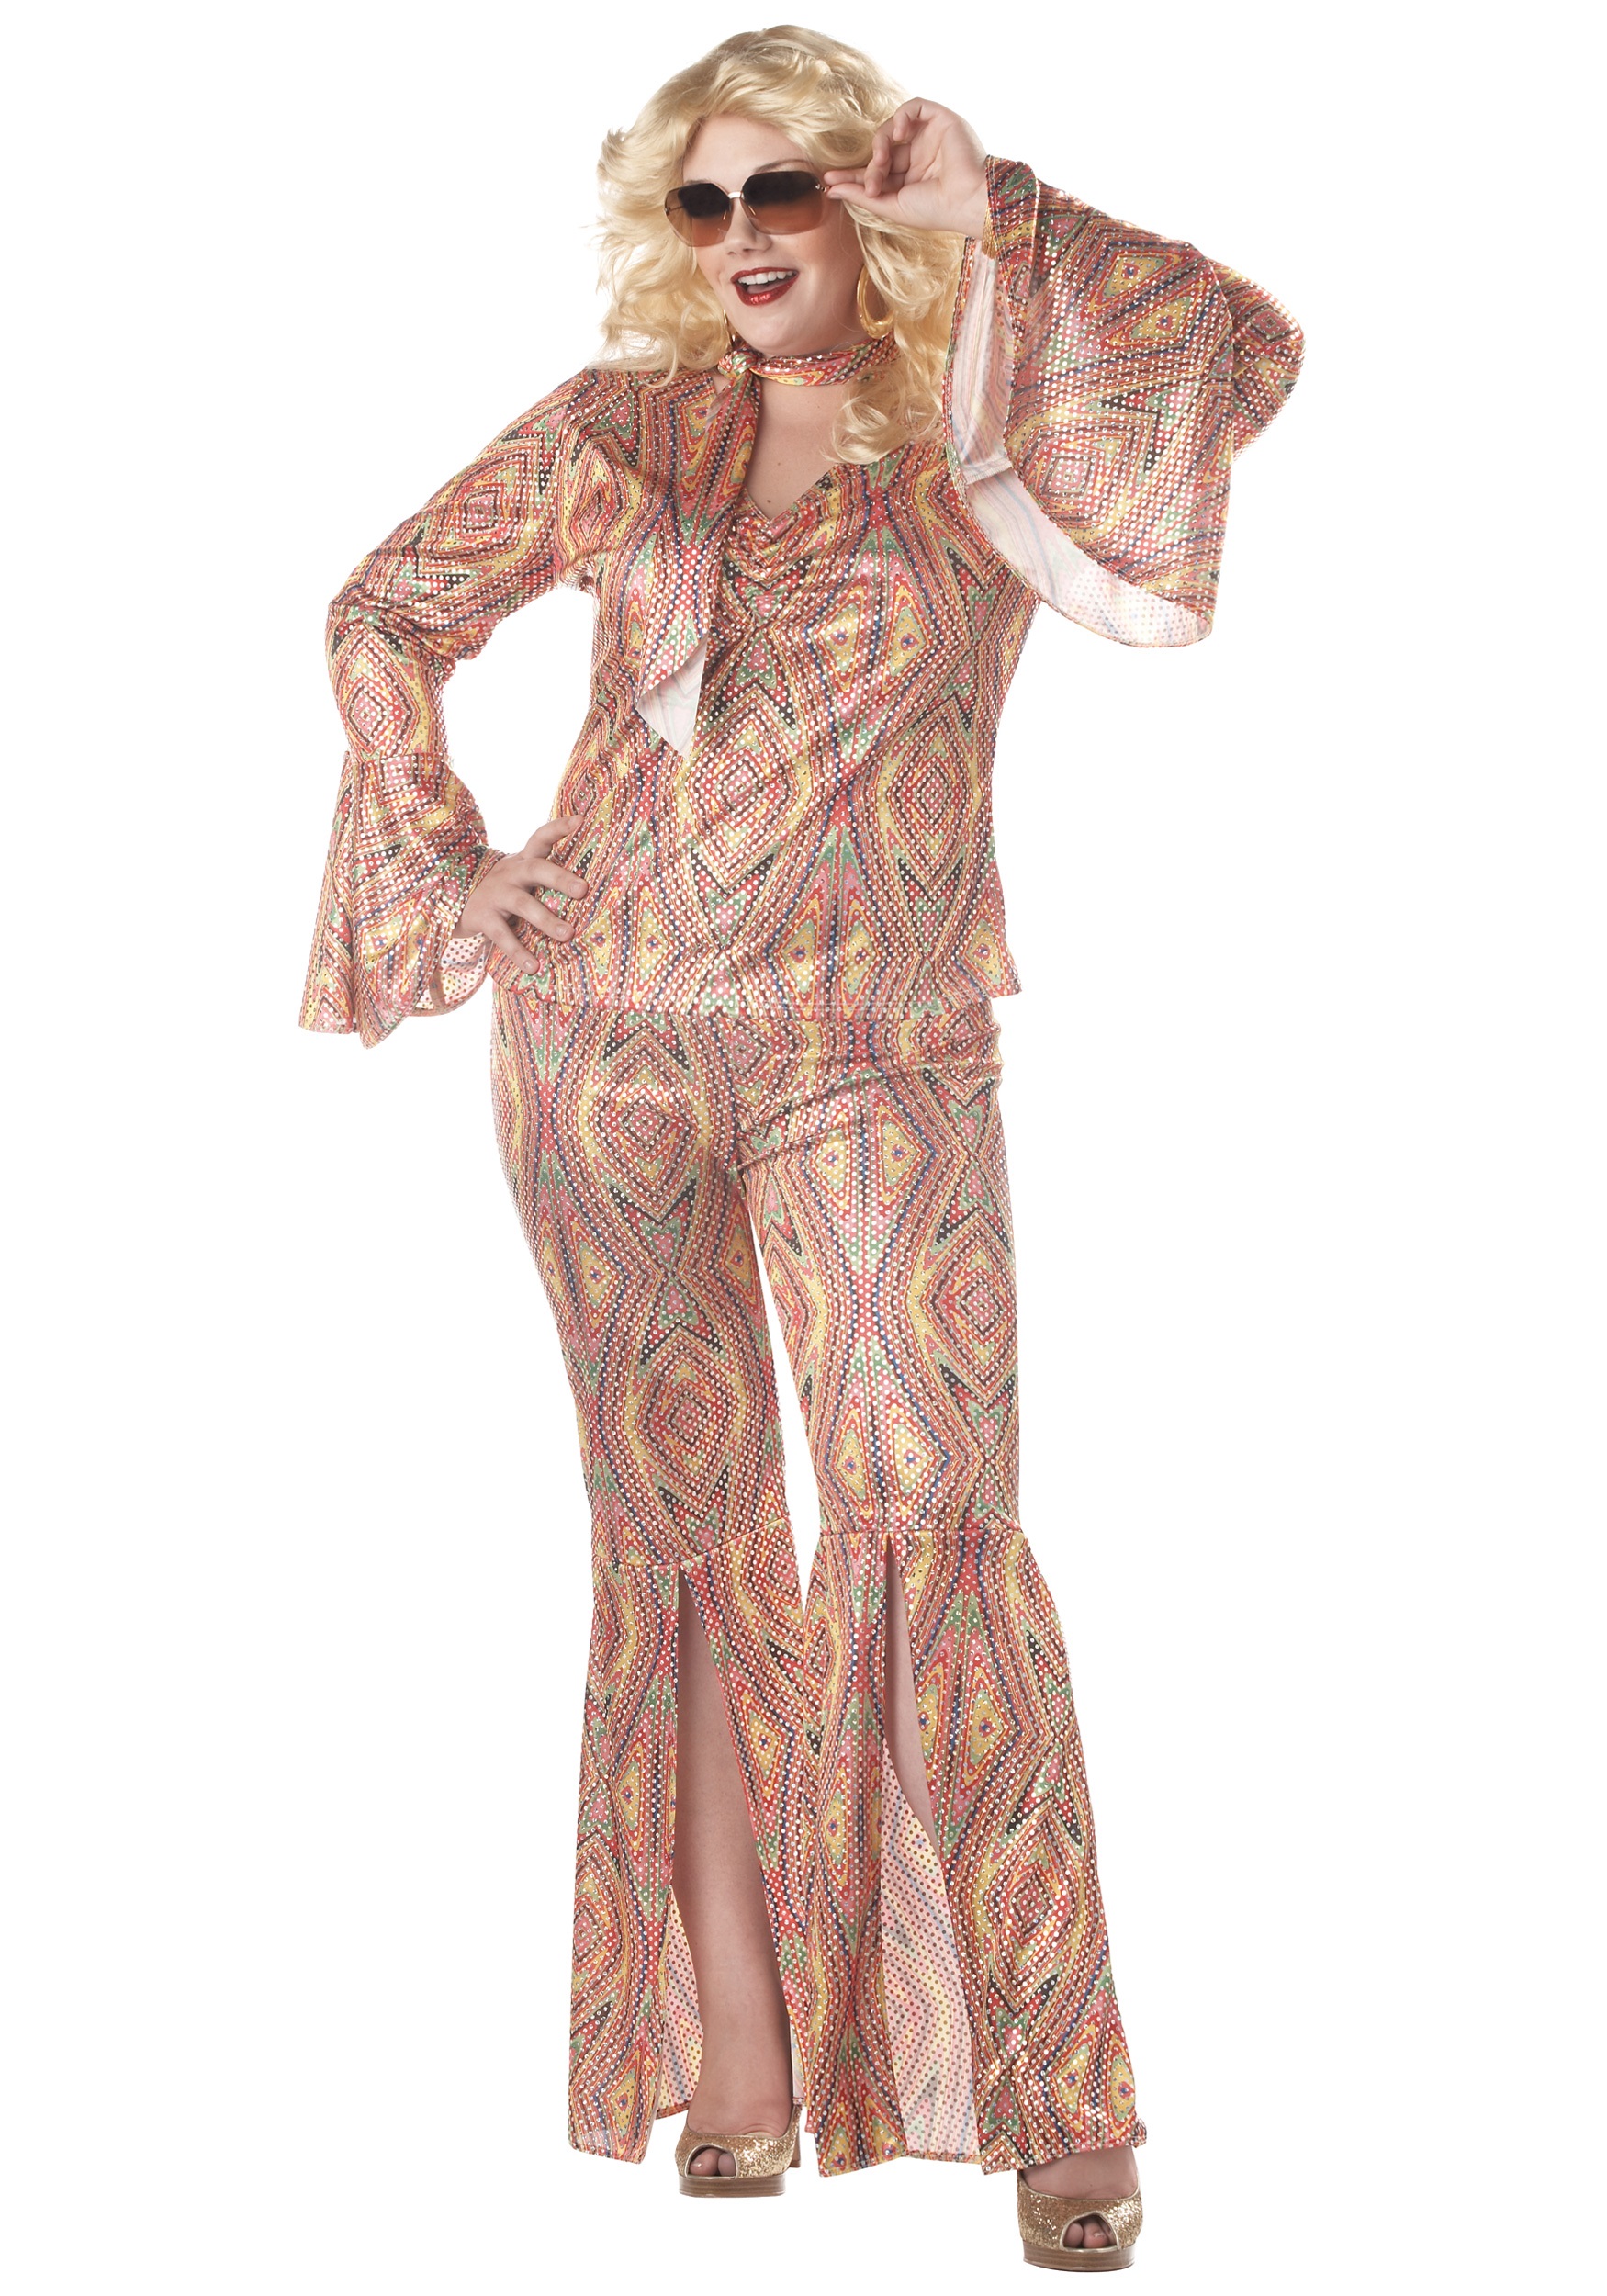 Women's Plus Size Wild Flower 70s Disco Dress Costume 